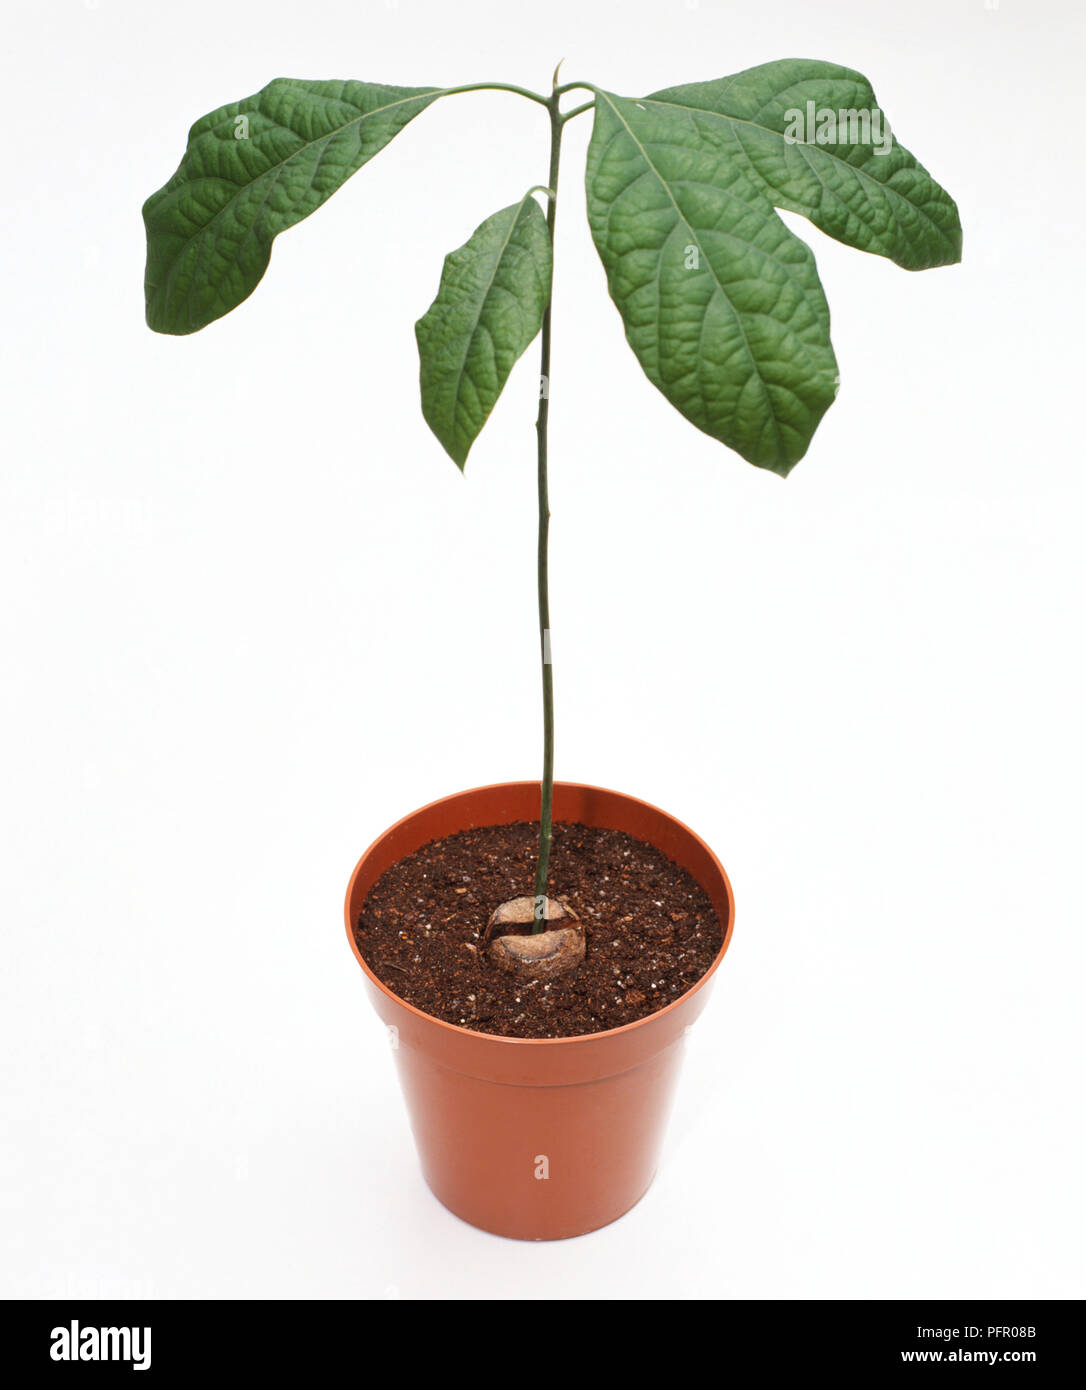 Persea americana (Avocado), seedling in pot Stock Photo